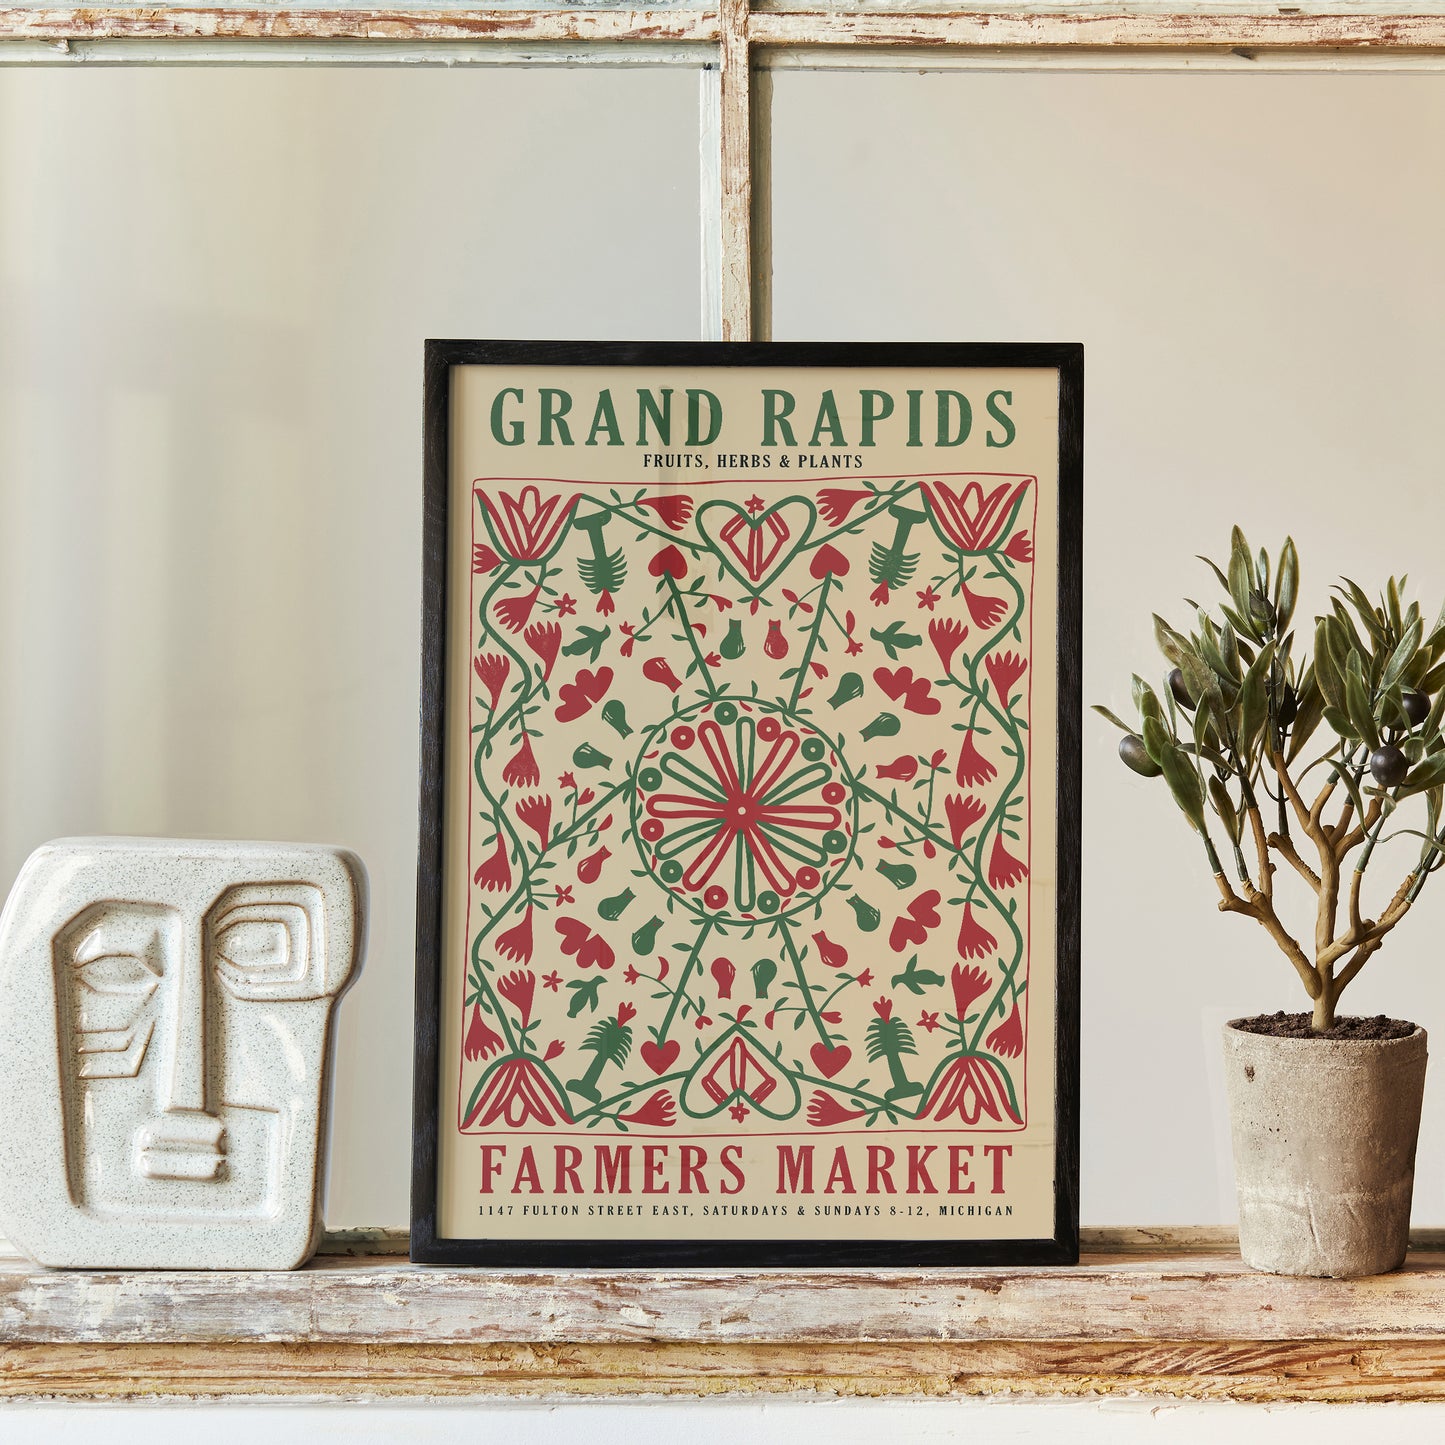 Farmers Market, Michigan Poster